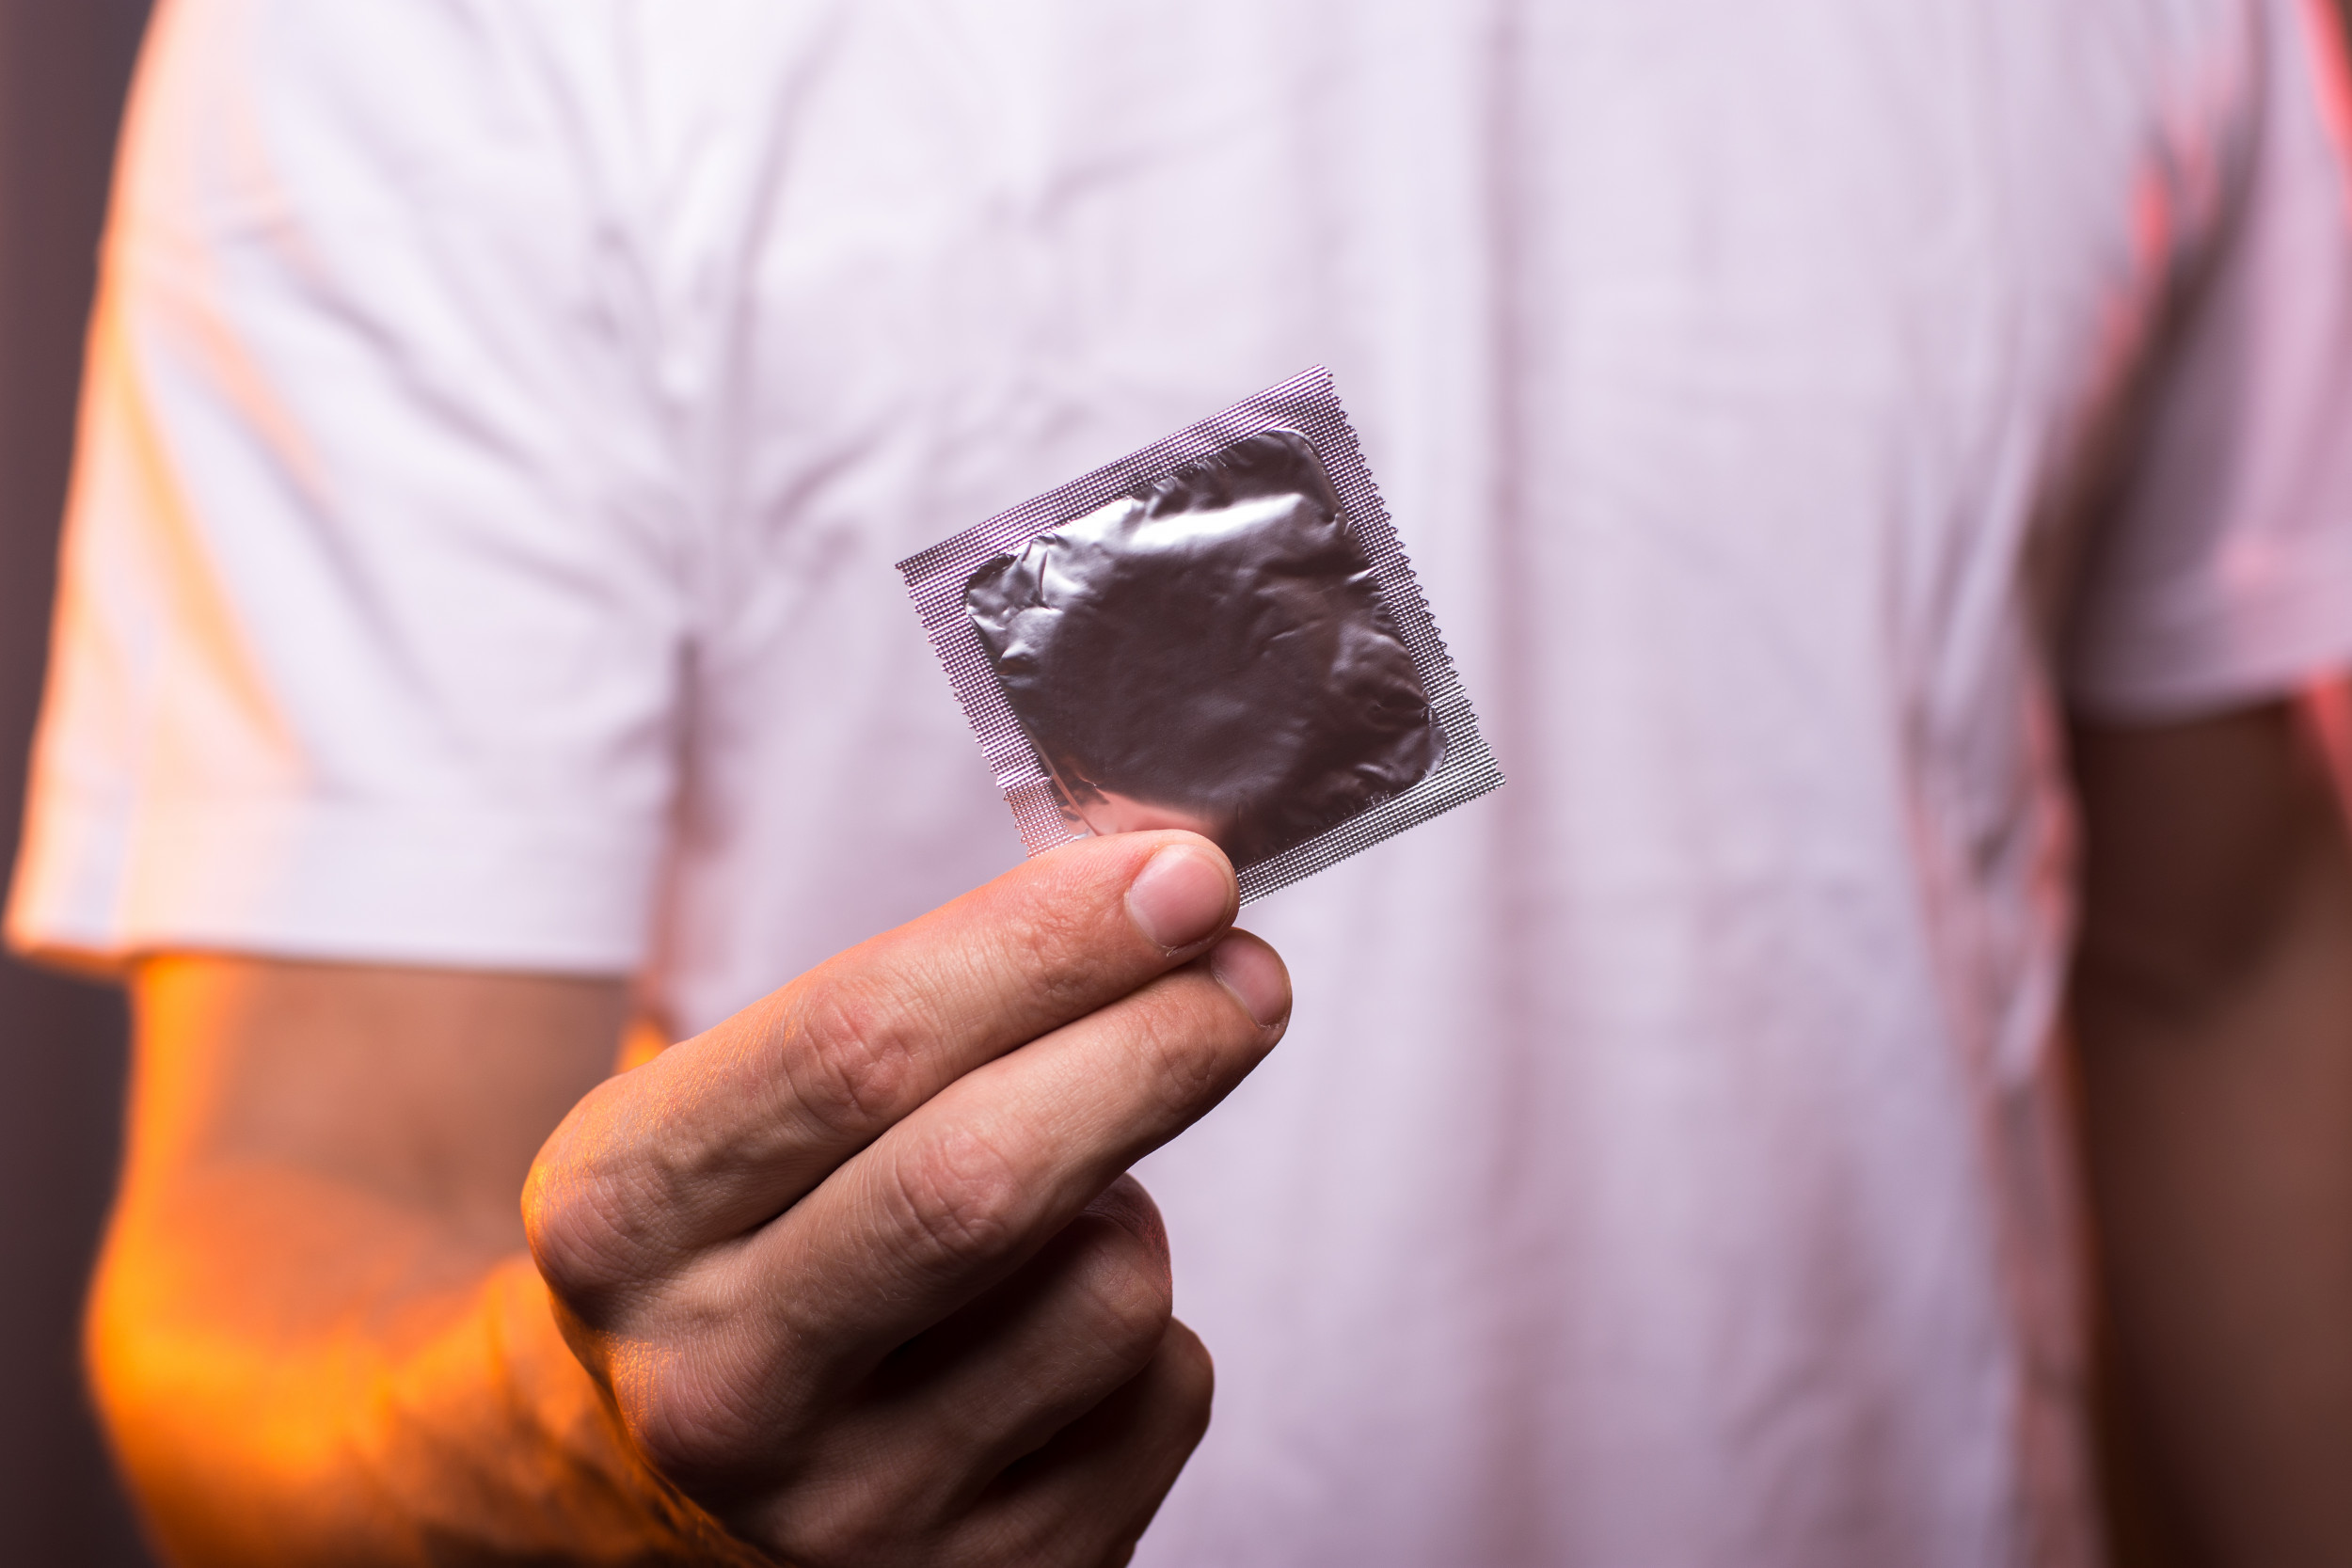 Man Uses Adhesive Instead of Condom, Dies